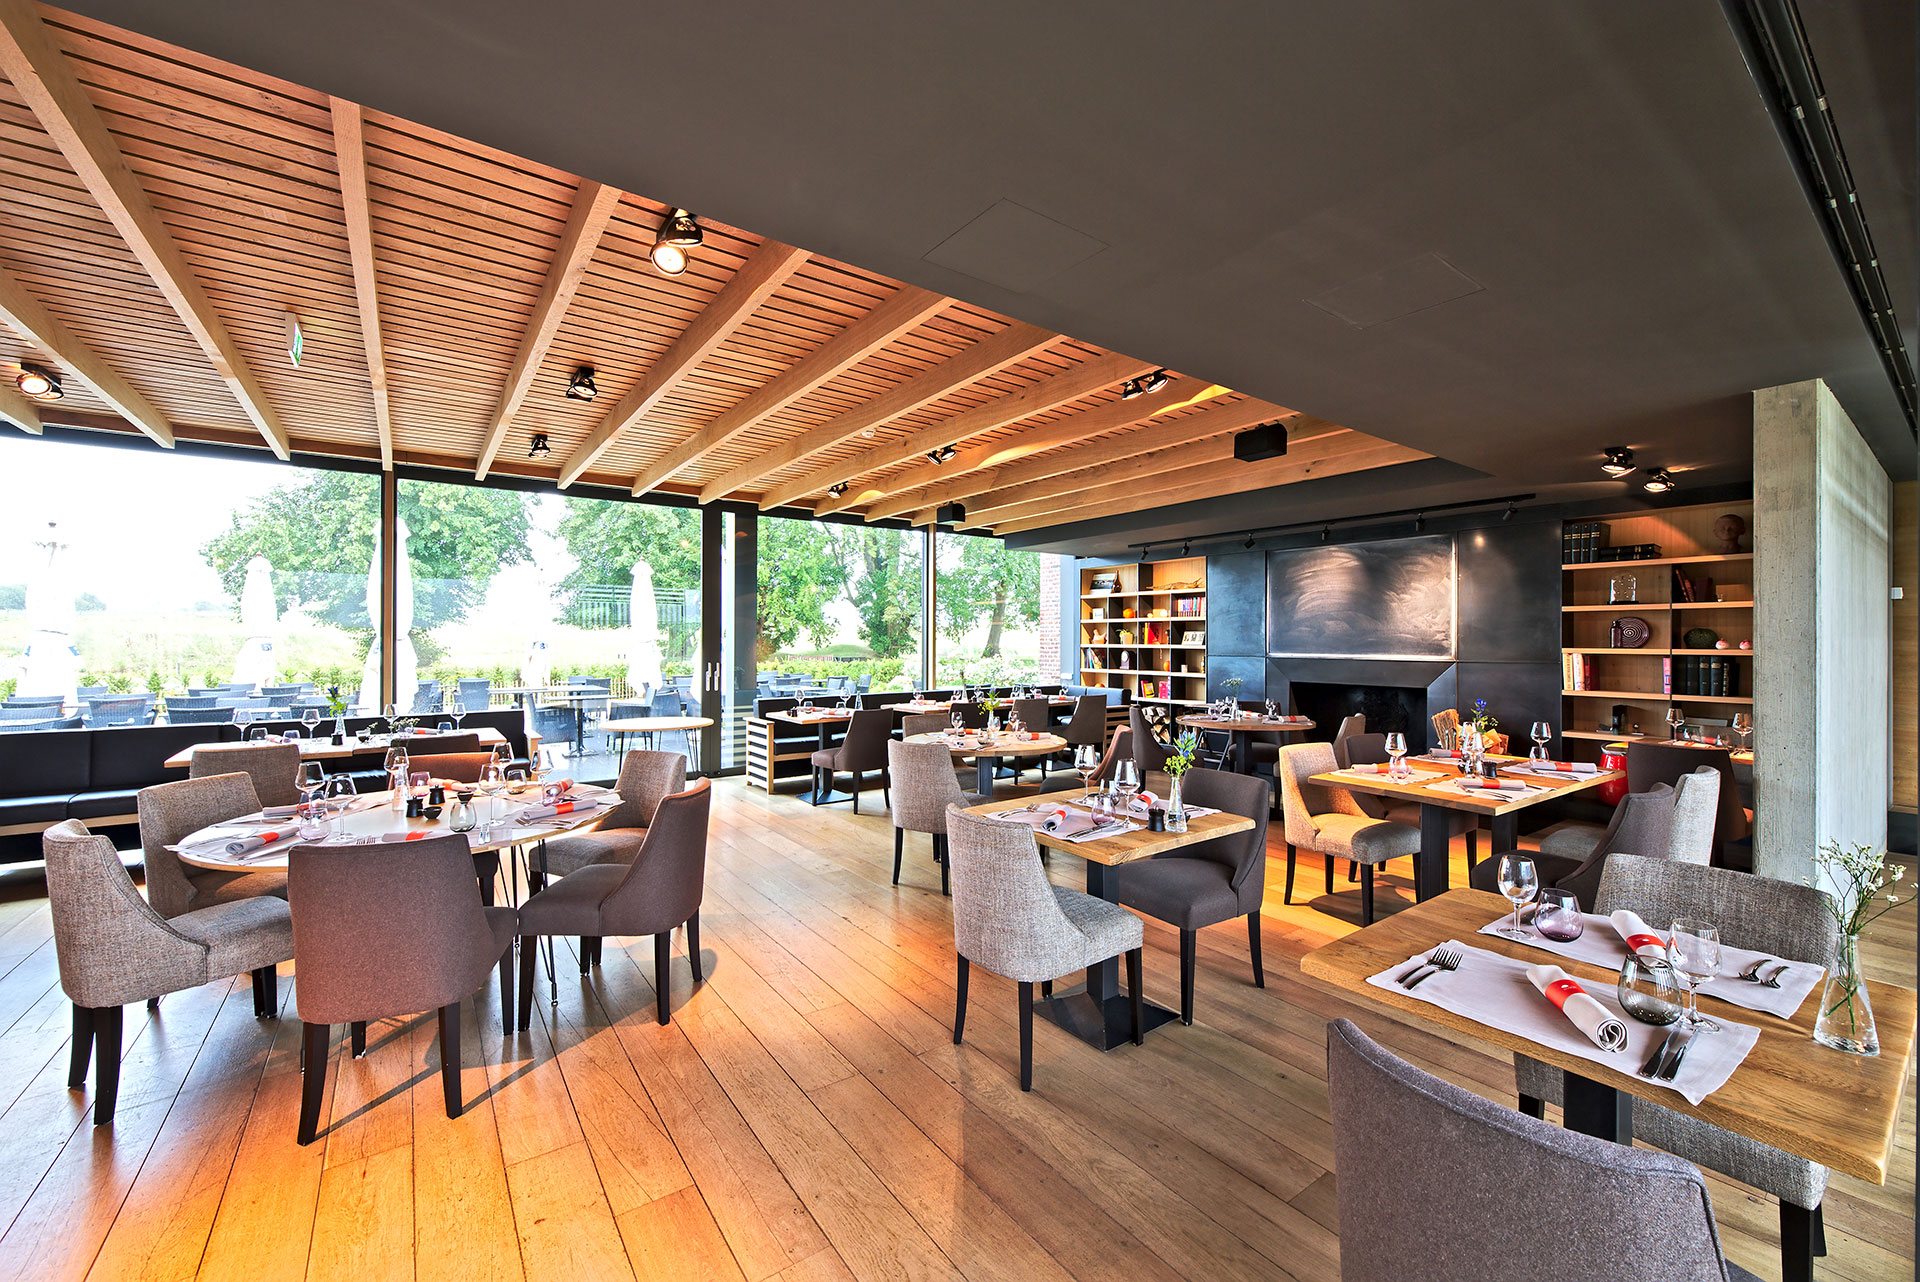 Hôtel Naxhelet - Golf Club - spa - province de Liège - 35 chambres - Wellness - restaurant